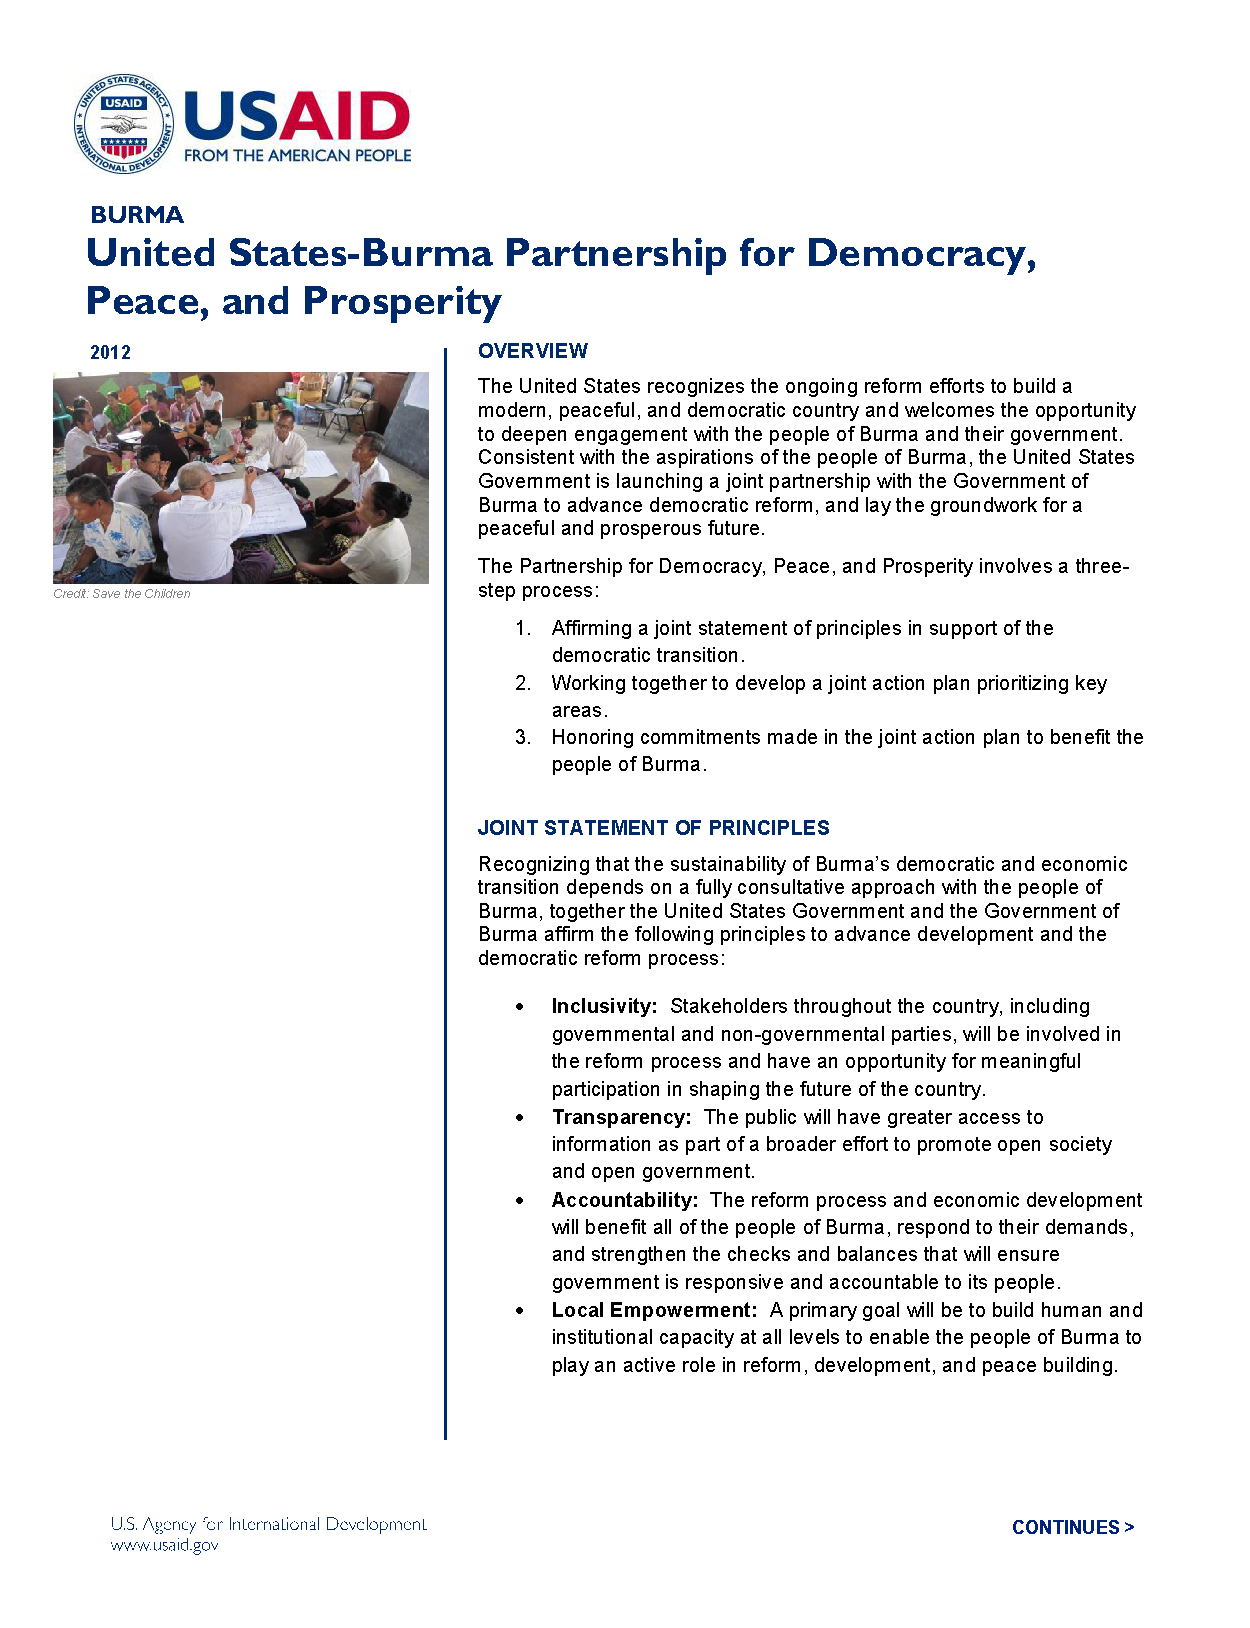 United States-Burma Partnership for Democracy, Peace, and Prosperity Fact Sheet